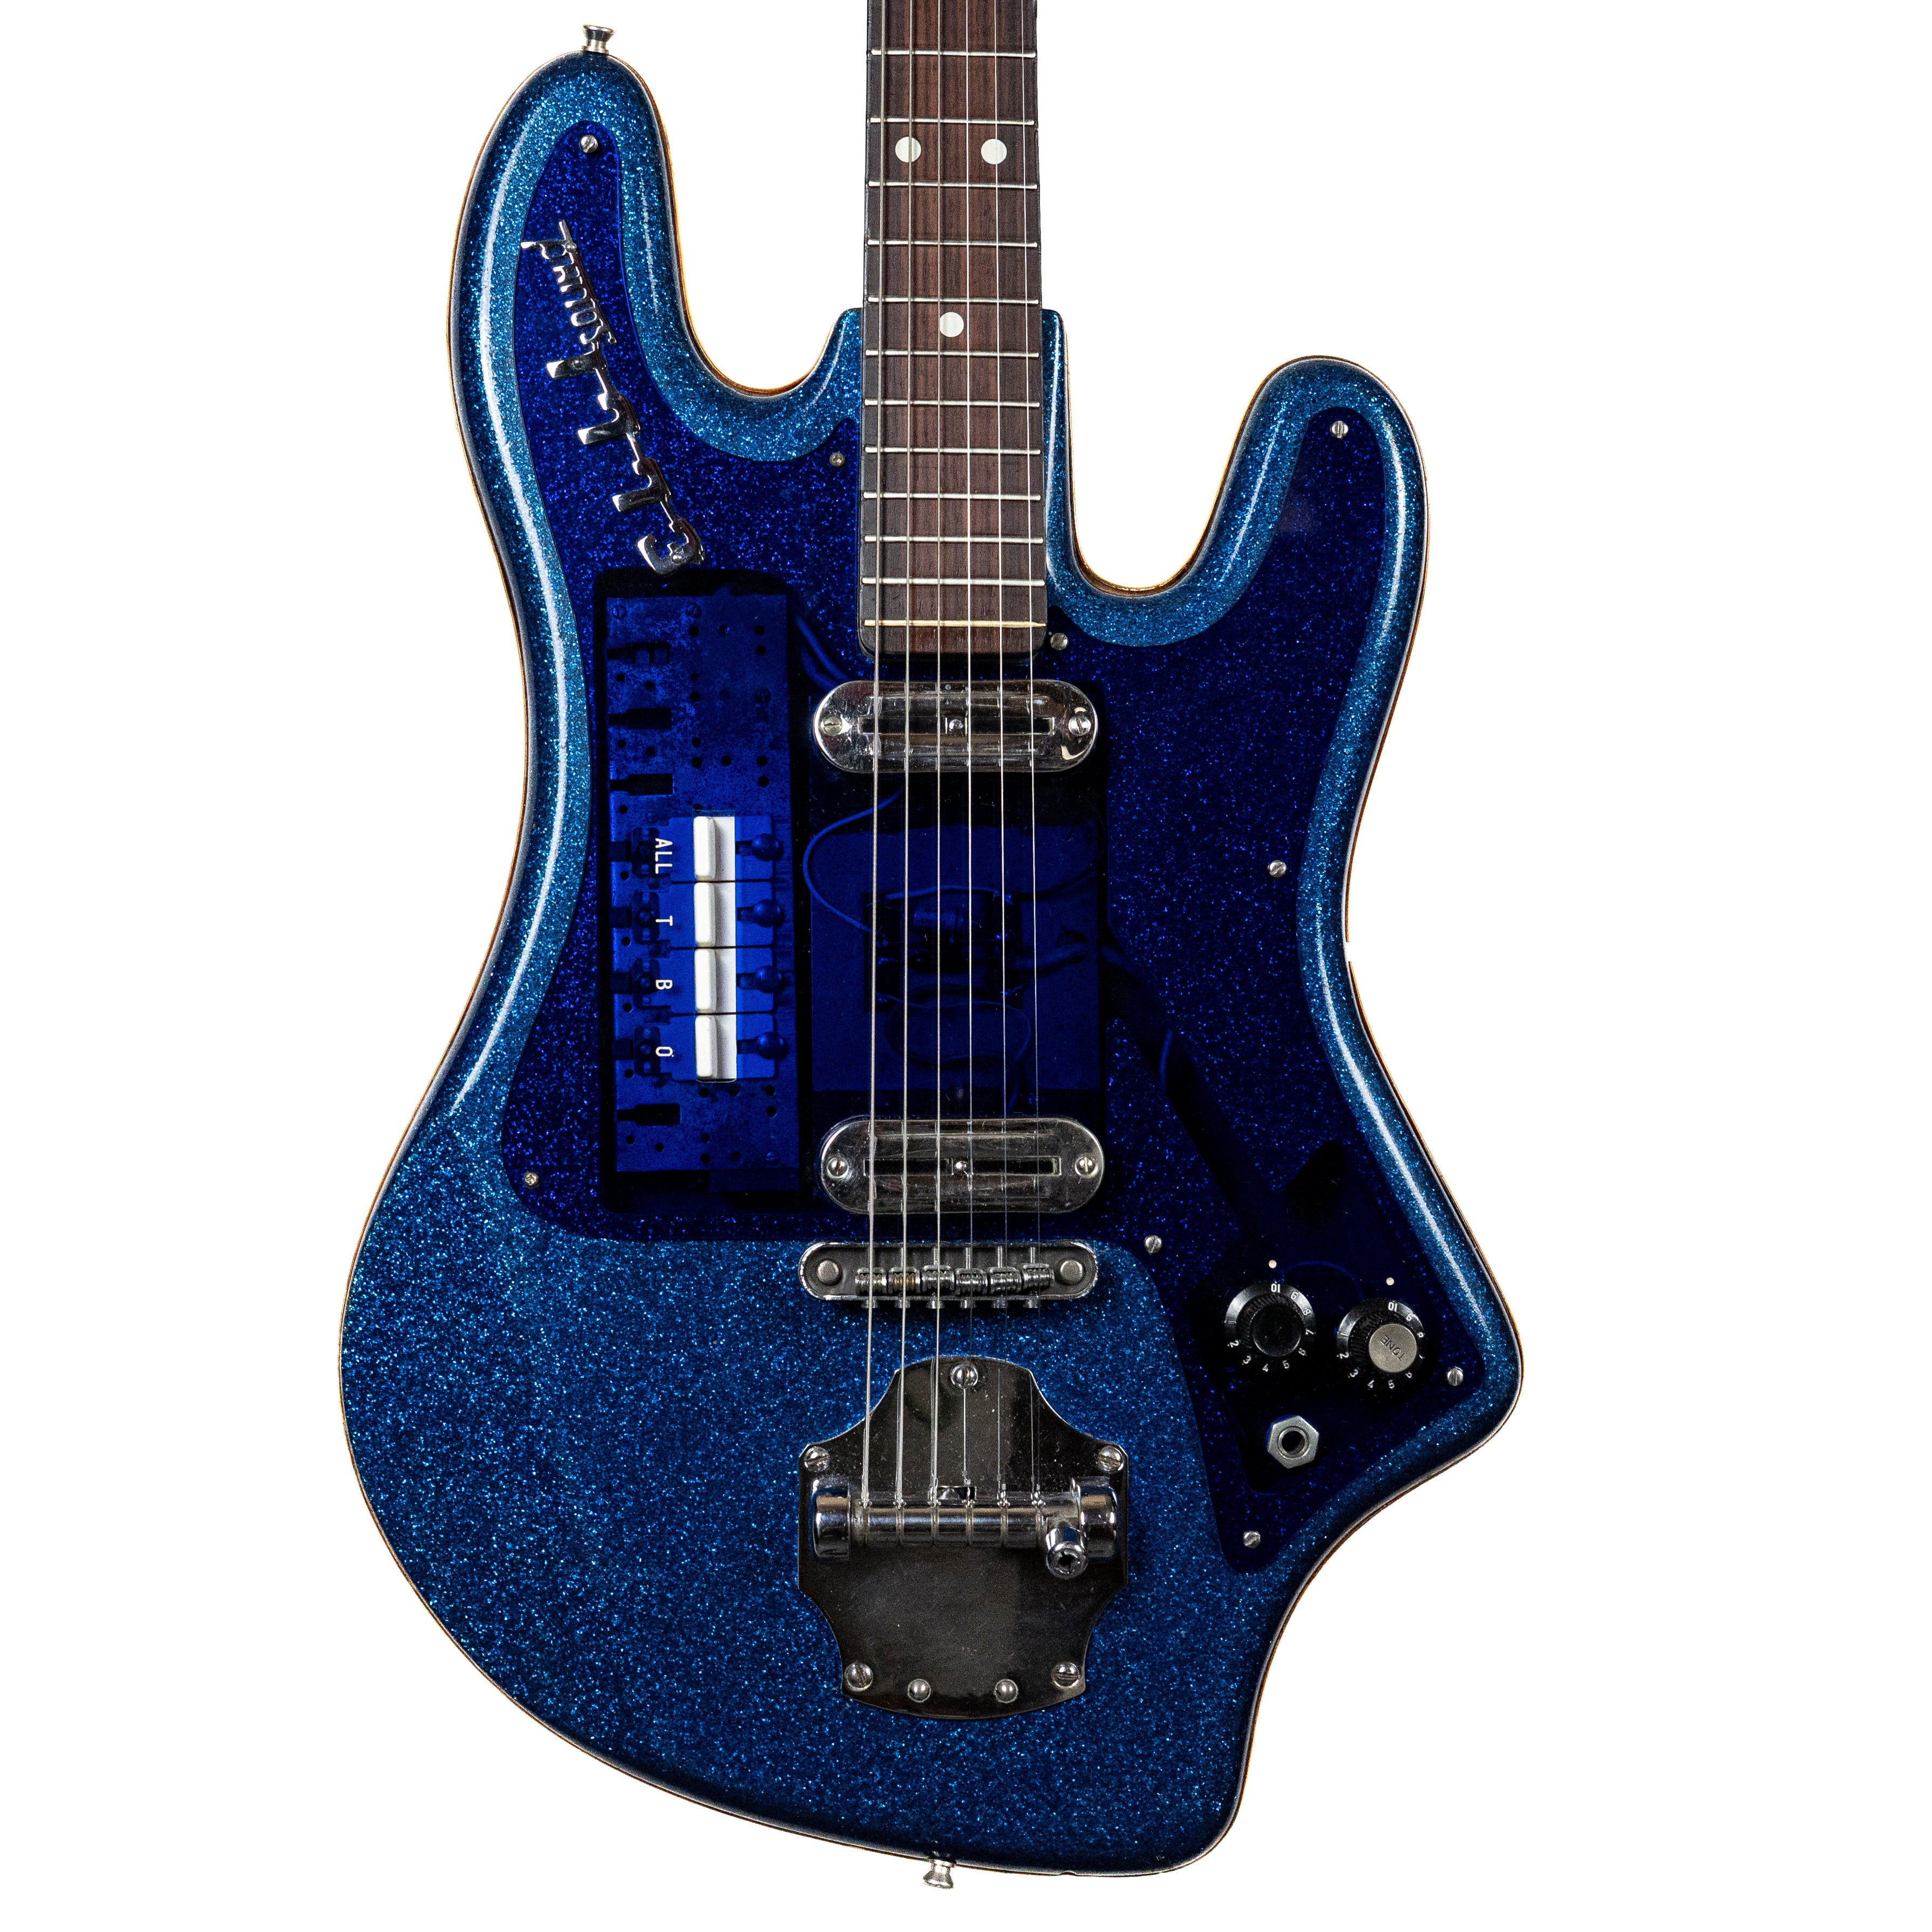 Crucianelli 1960's Guitar, Blue Sparkle